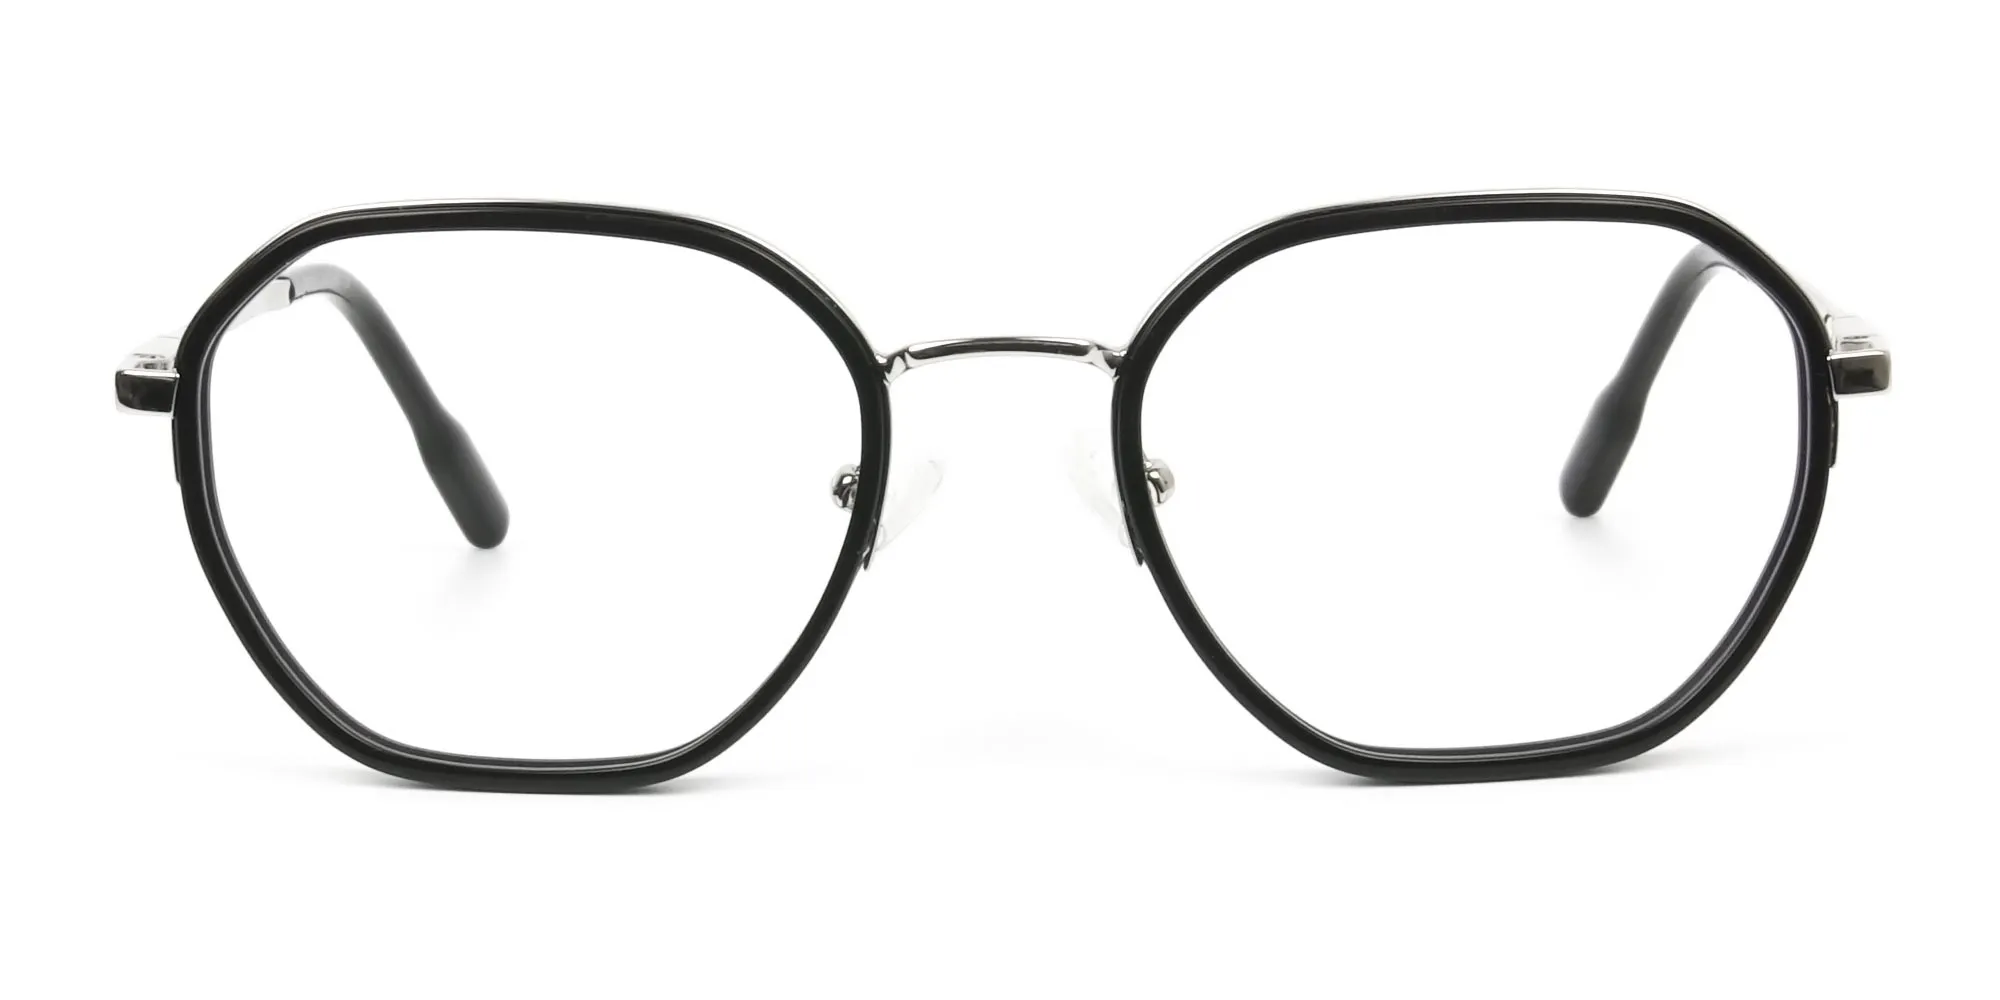 Square Black and Silver Geometric Glasses - 2